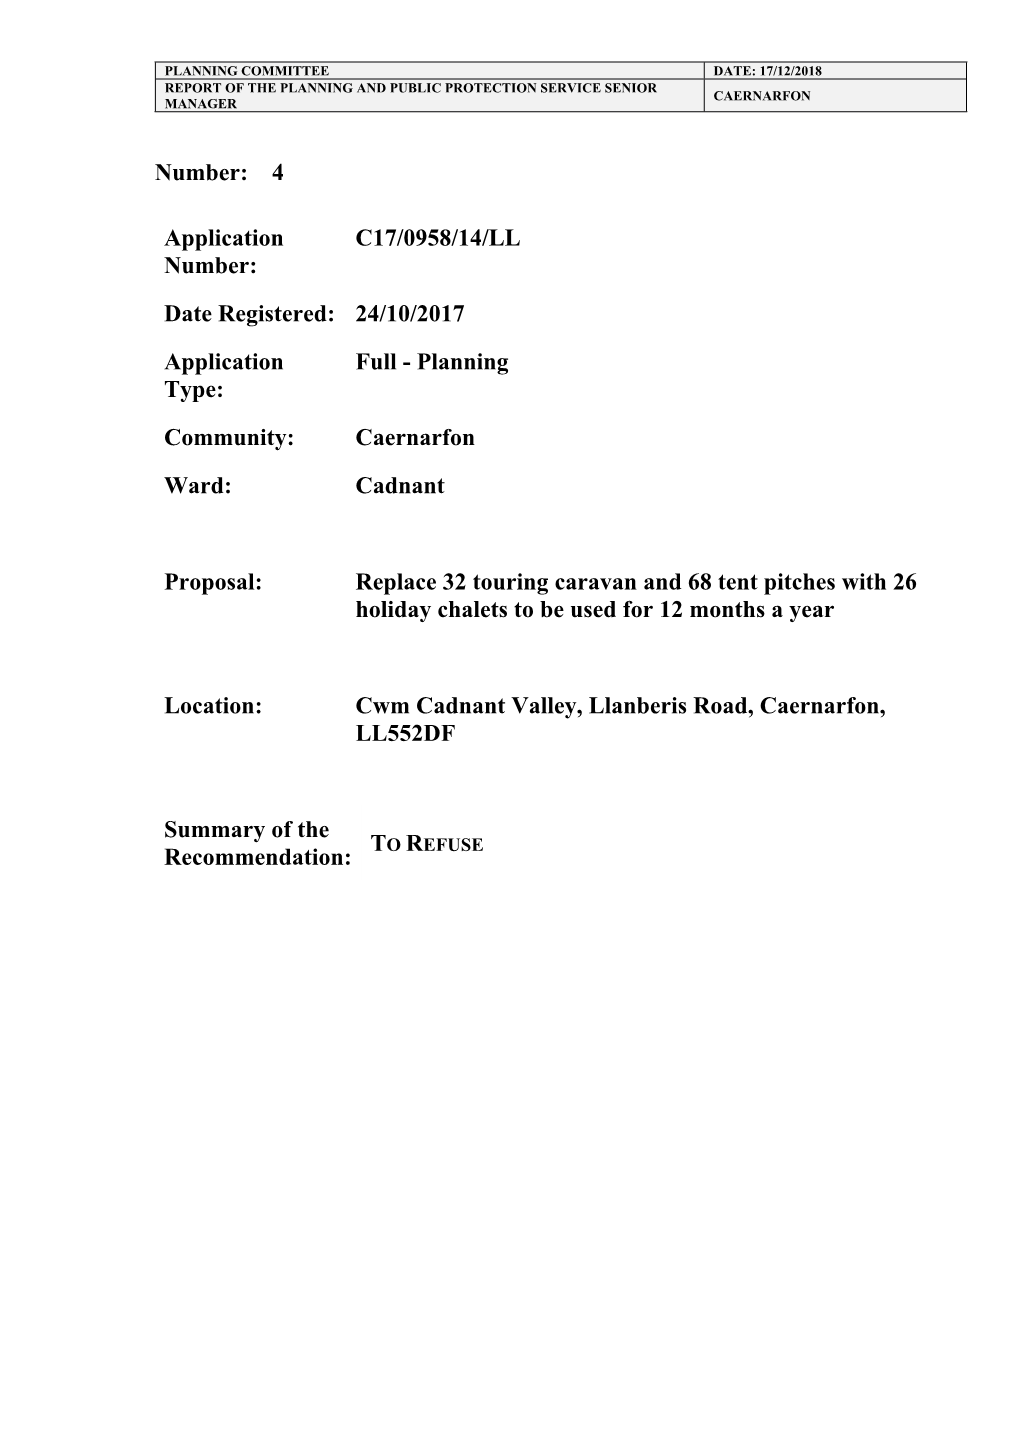 Cwm Cadnant Valley, Llanberis Road, Caernarfon PDF 149 KB